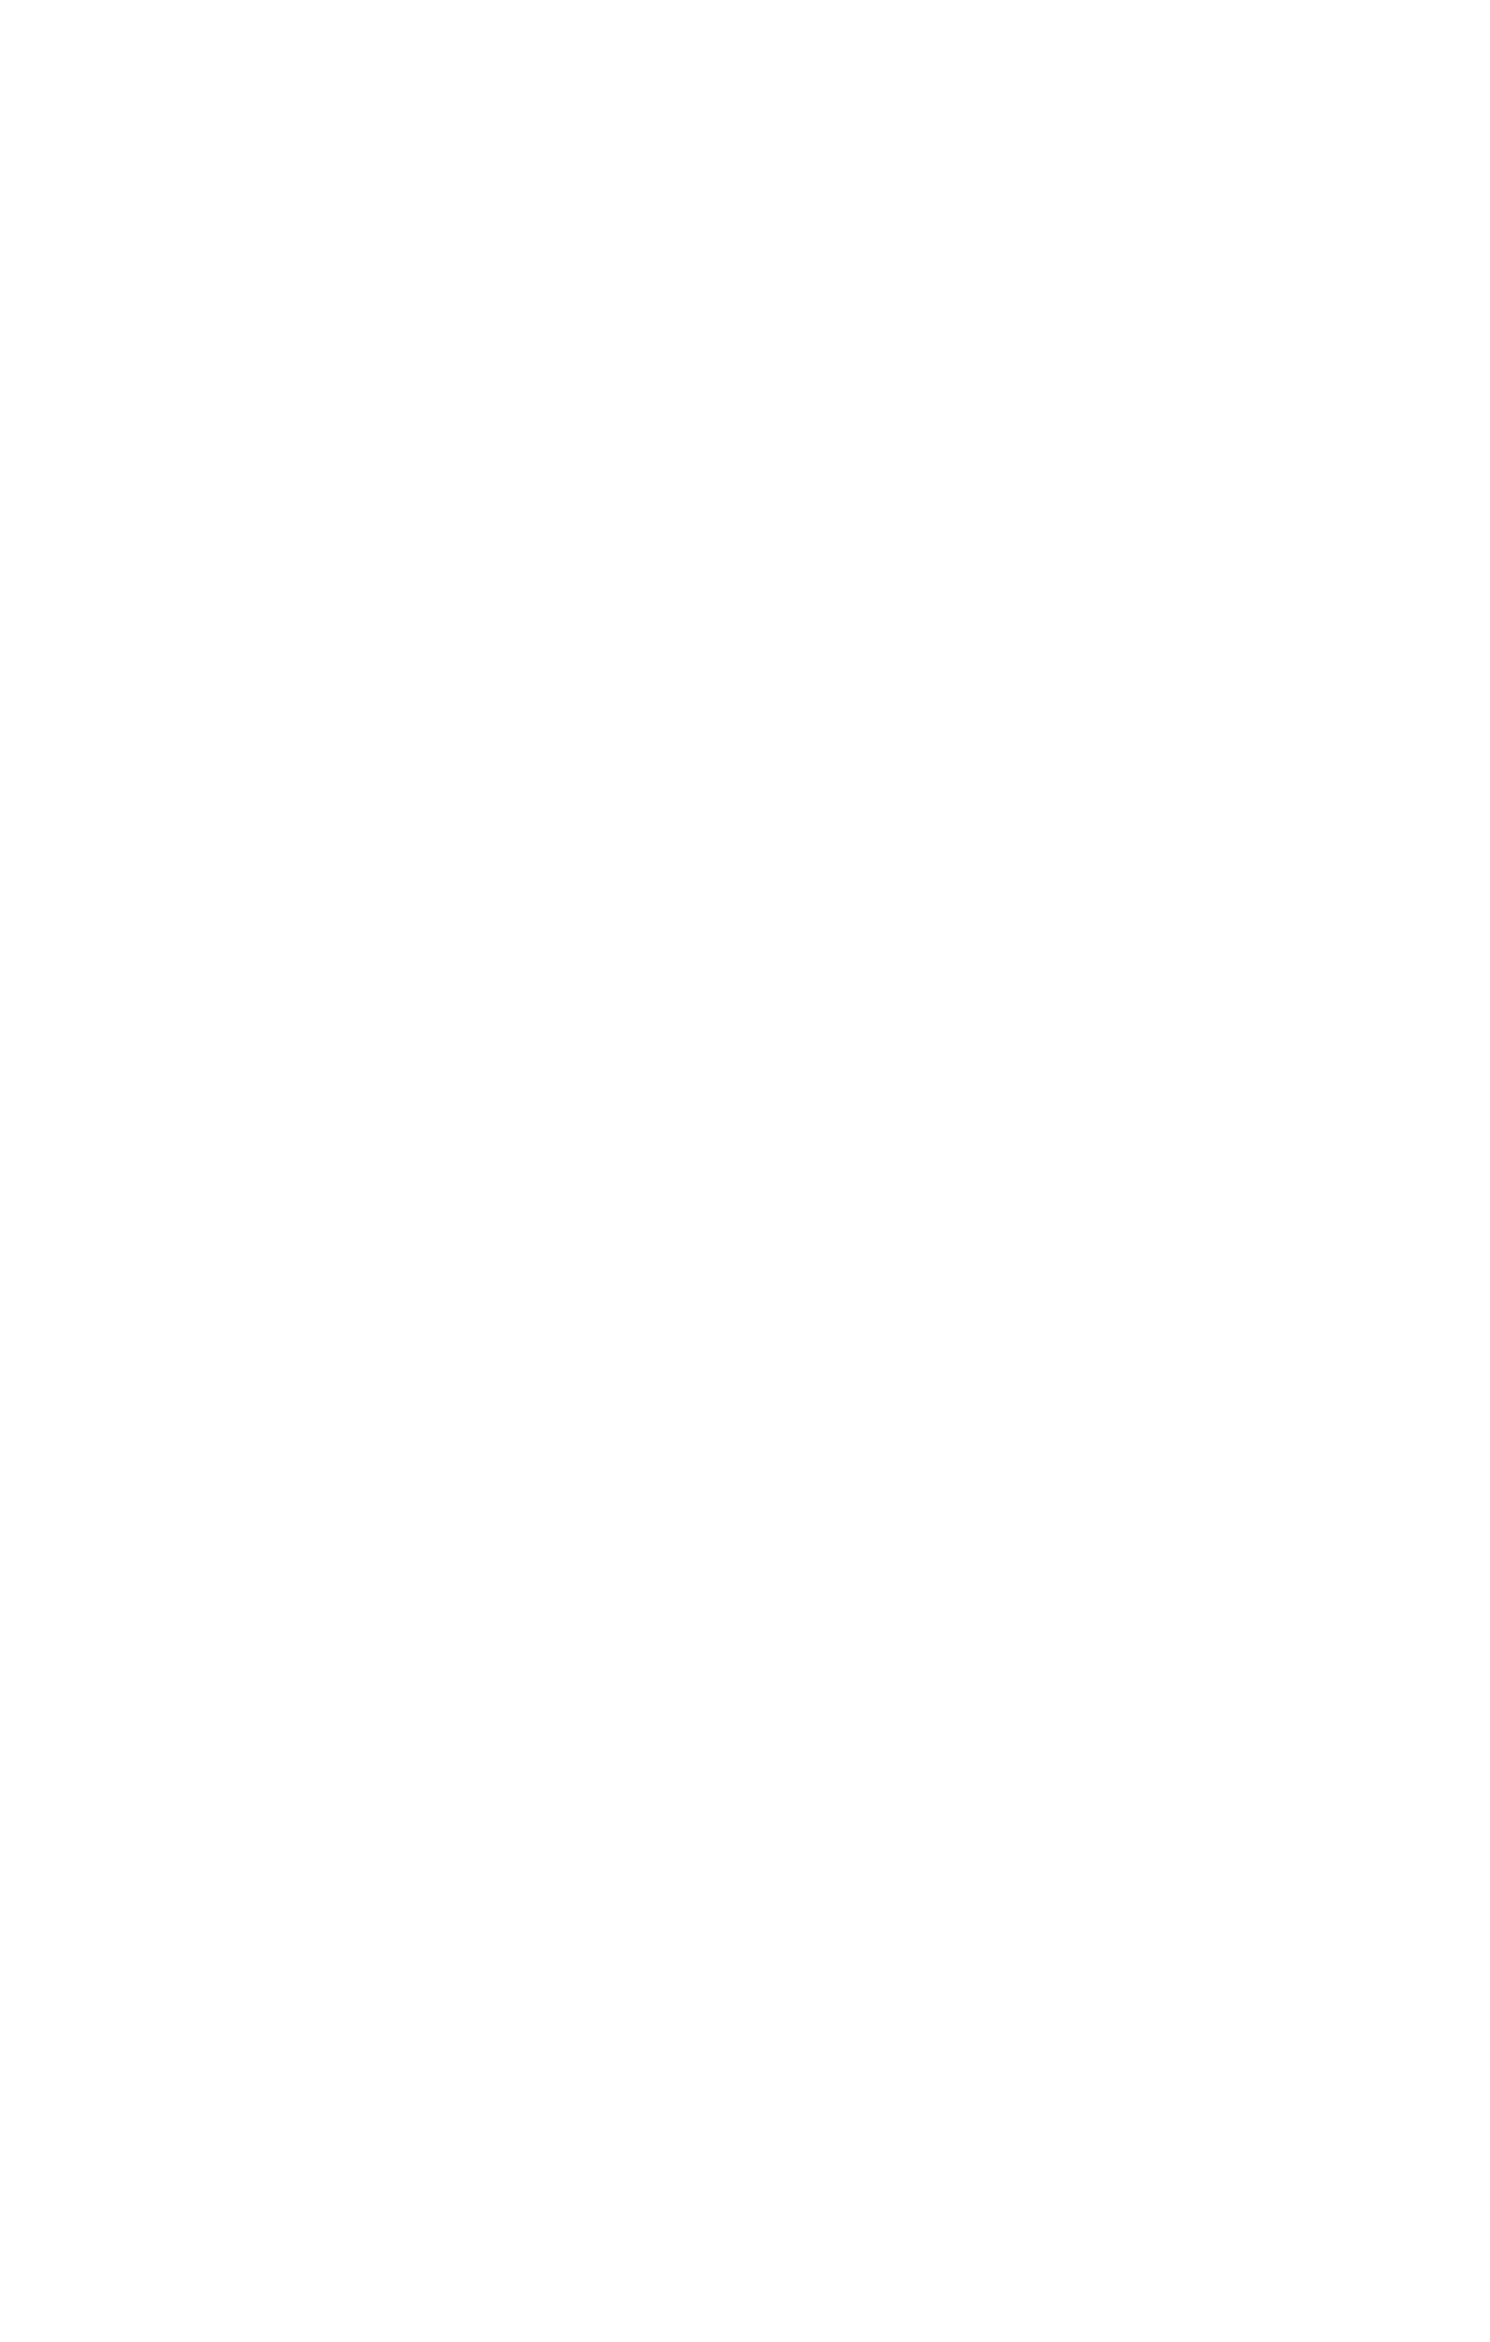 UW Crest logo